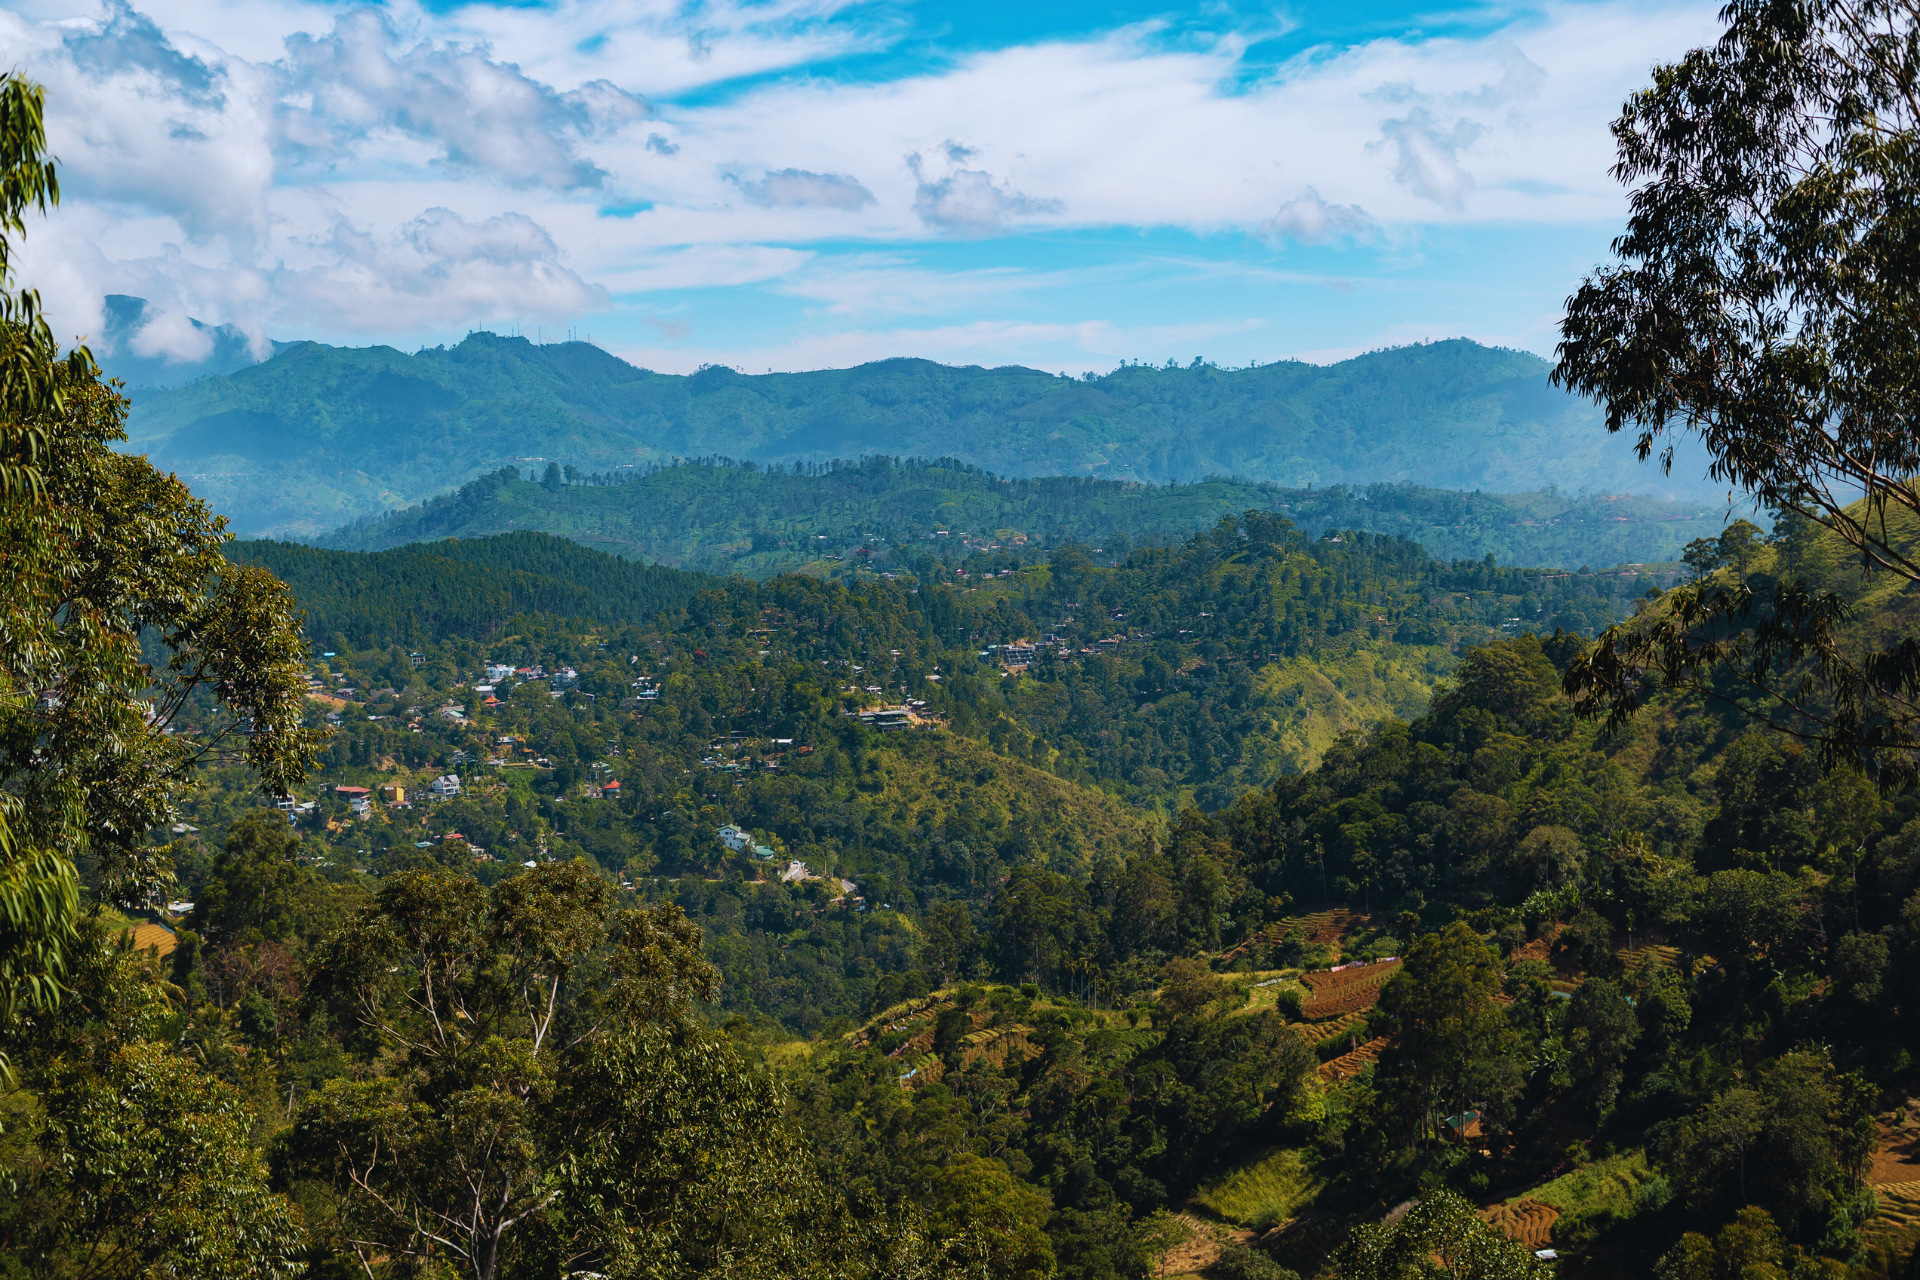 A view of Ella town as seen from Ella Rock, Sri Lanka.